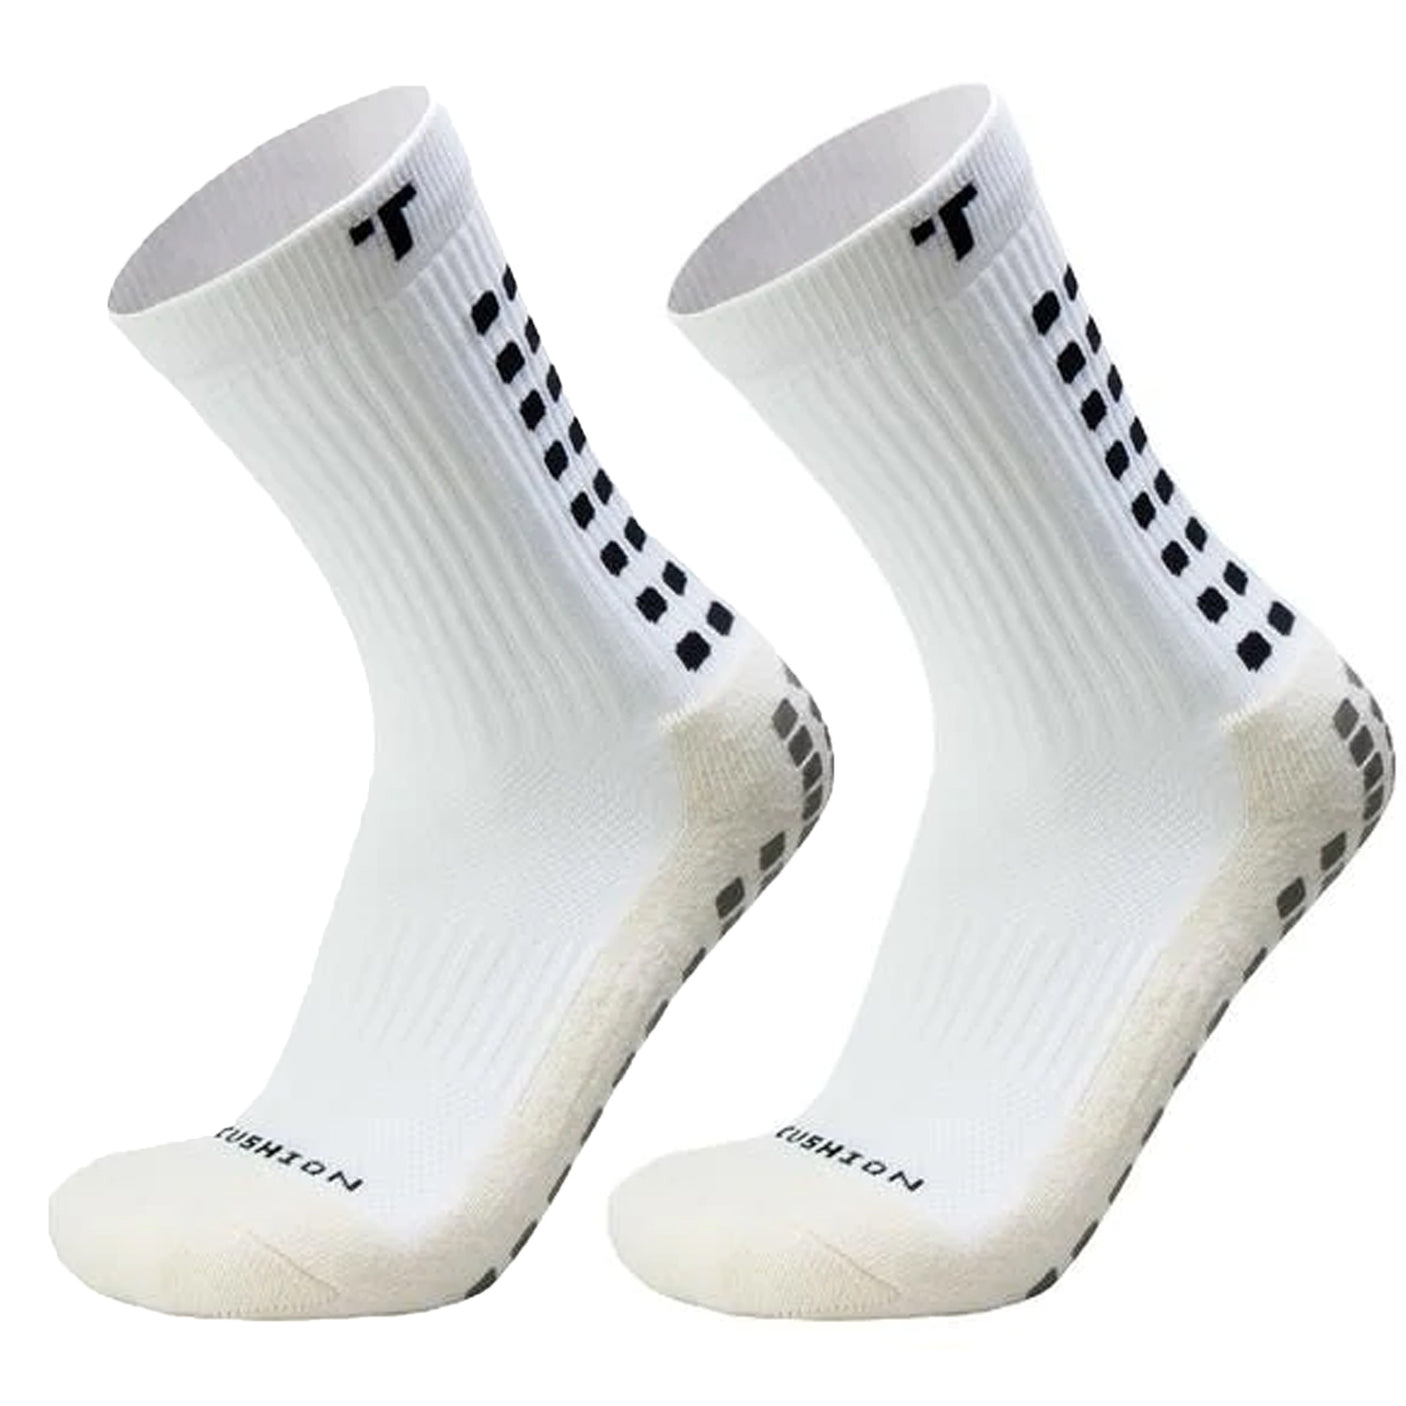 Soccer Grip Socks – Advantage Goalkeeping, Grip Socks